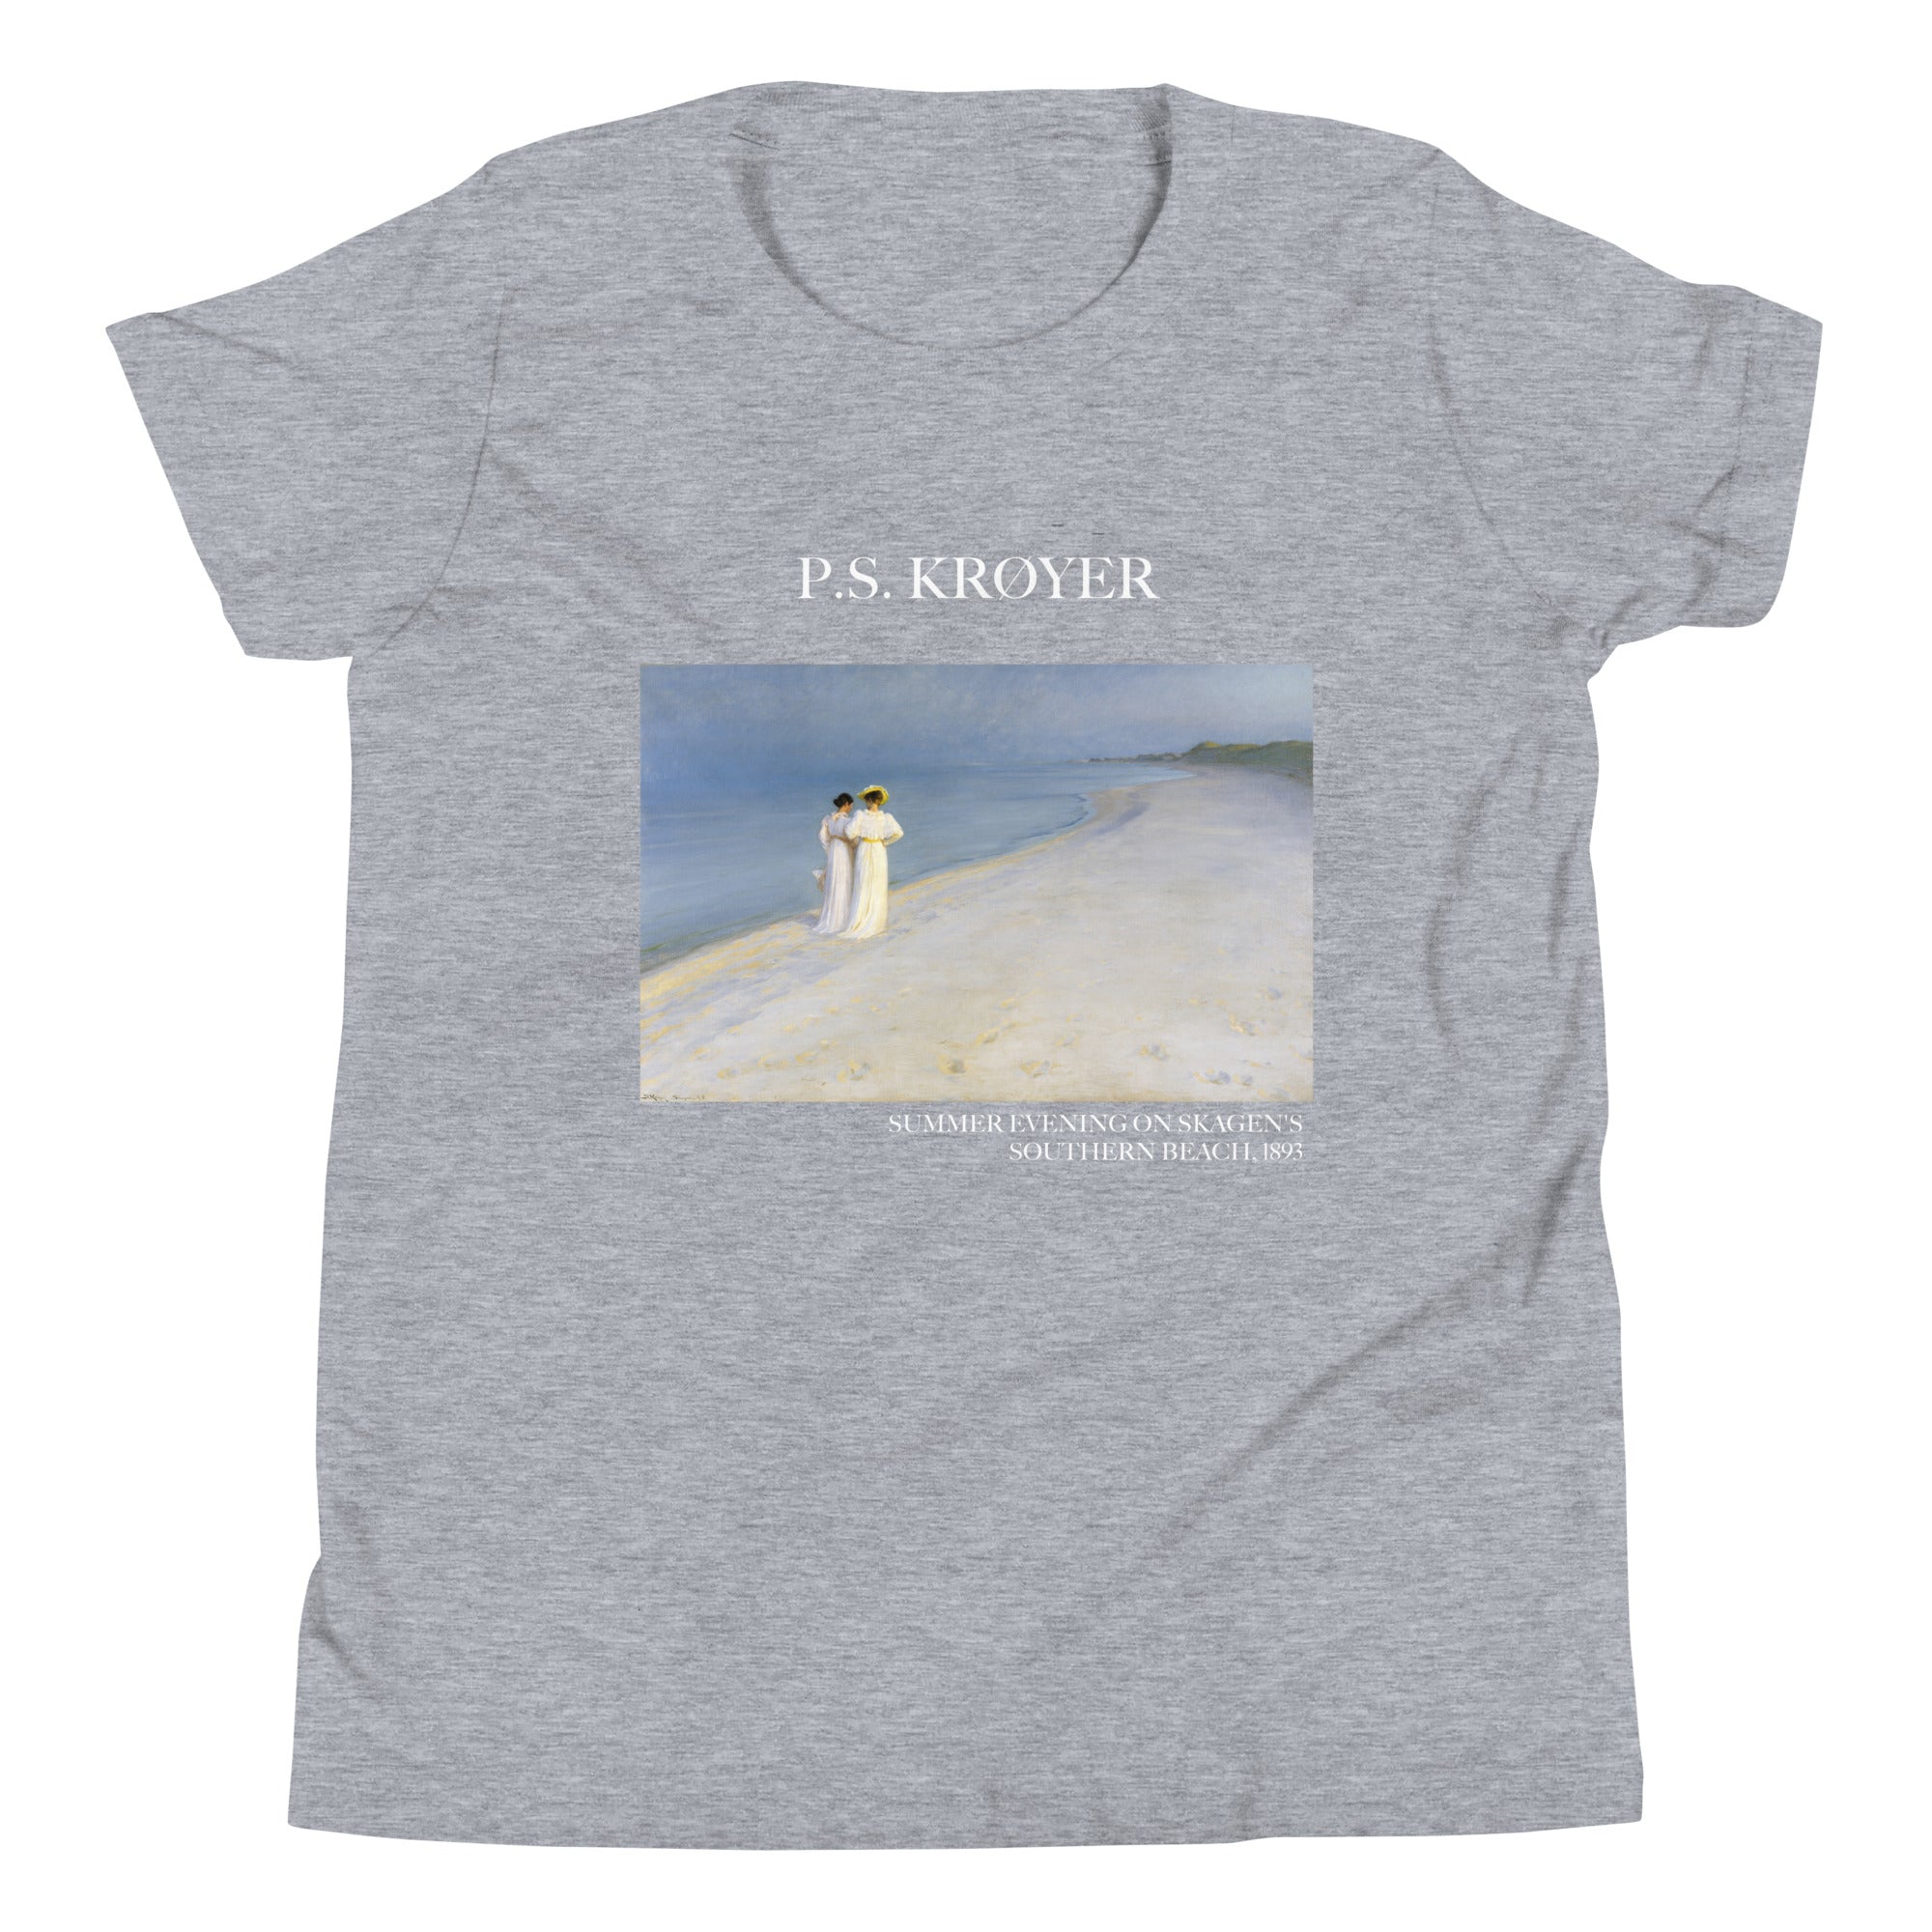 P.S. Krøyer 'Summer Evening on Skagen's Southern Beach' Famous Painting Short Sleeve T-Shirt | Premium Youth Art Tee